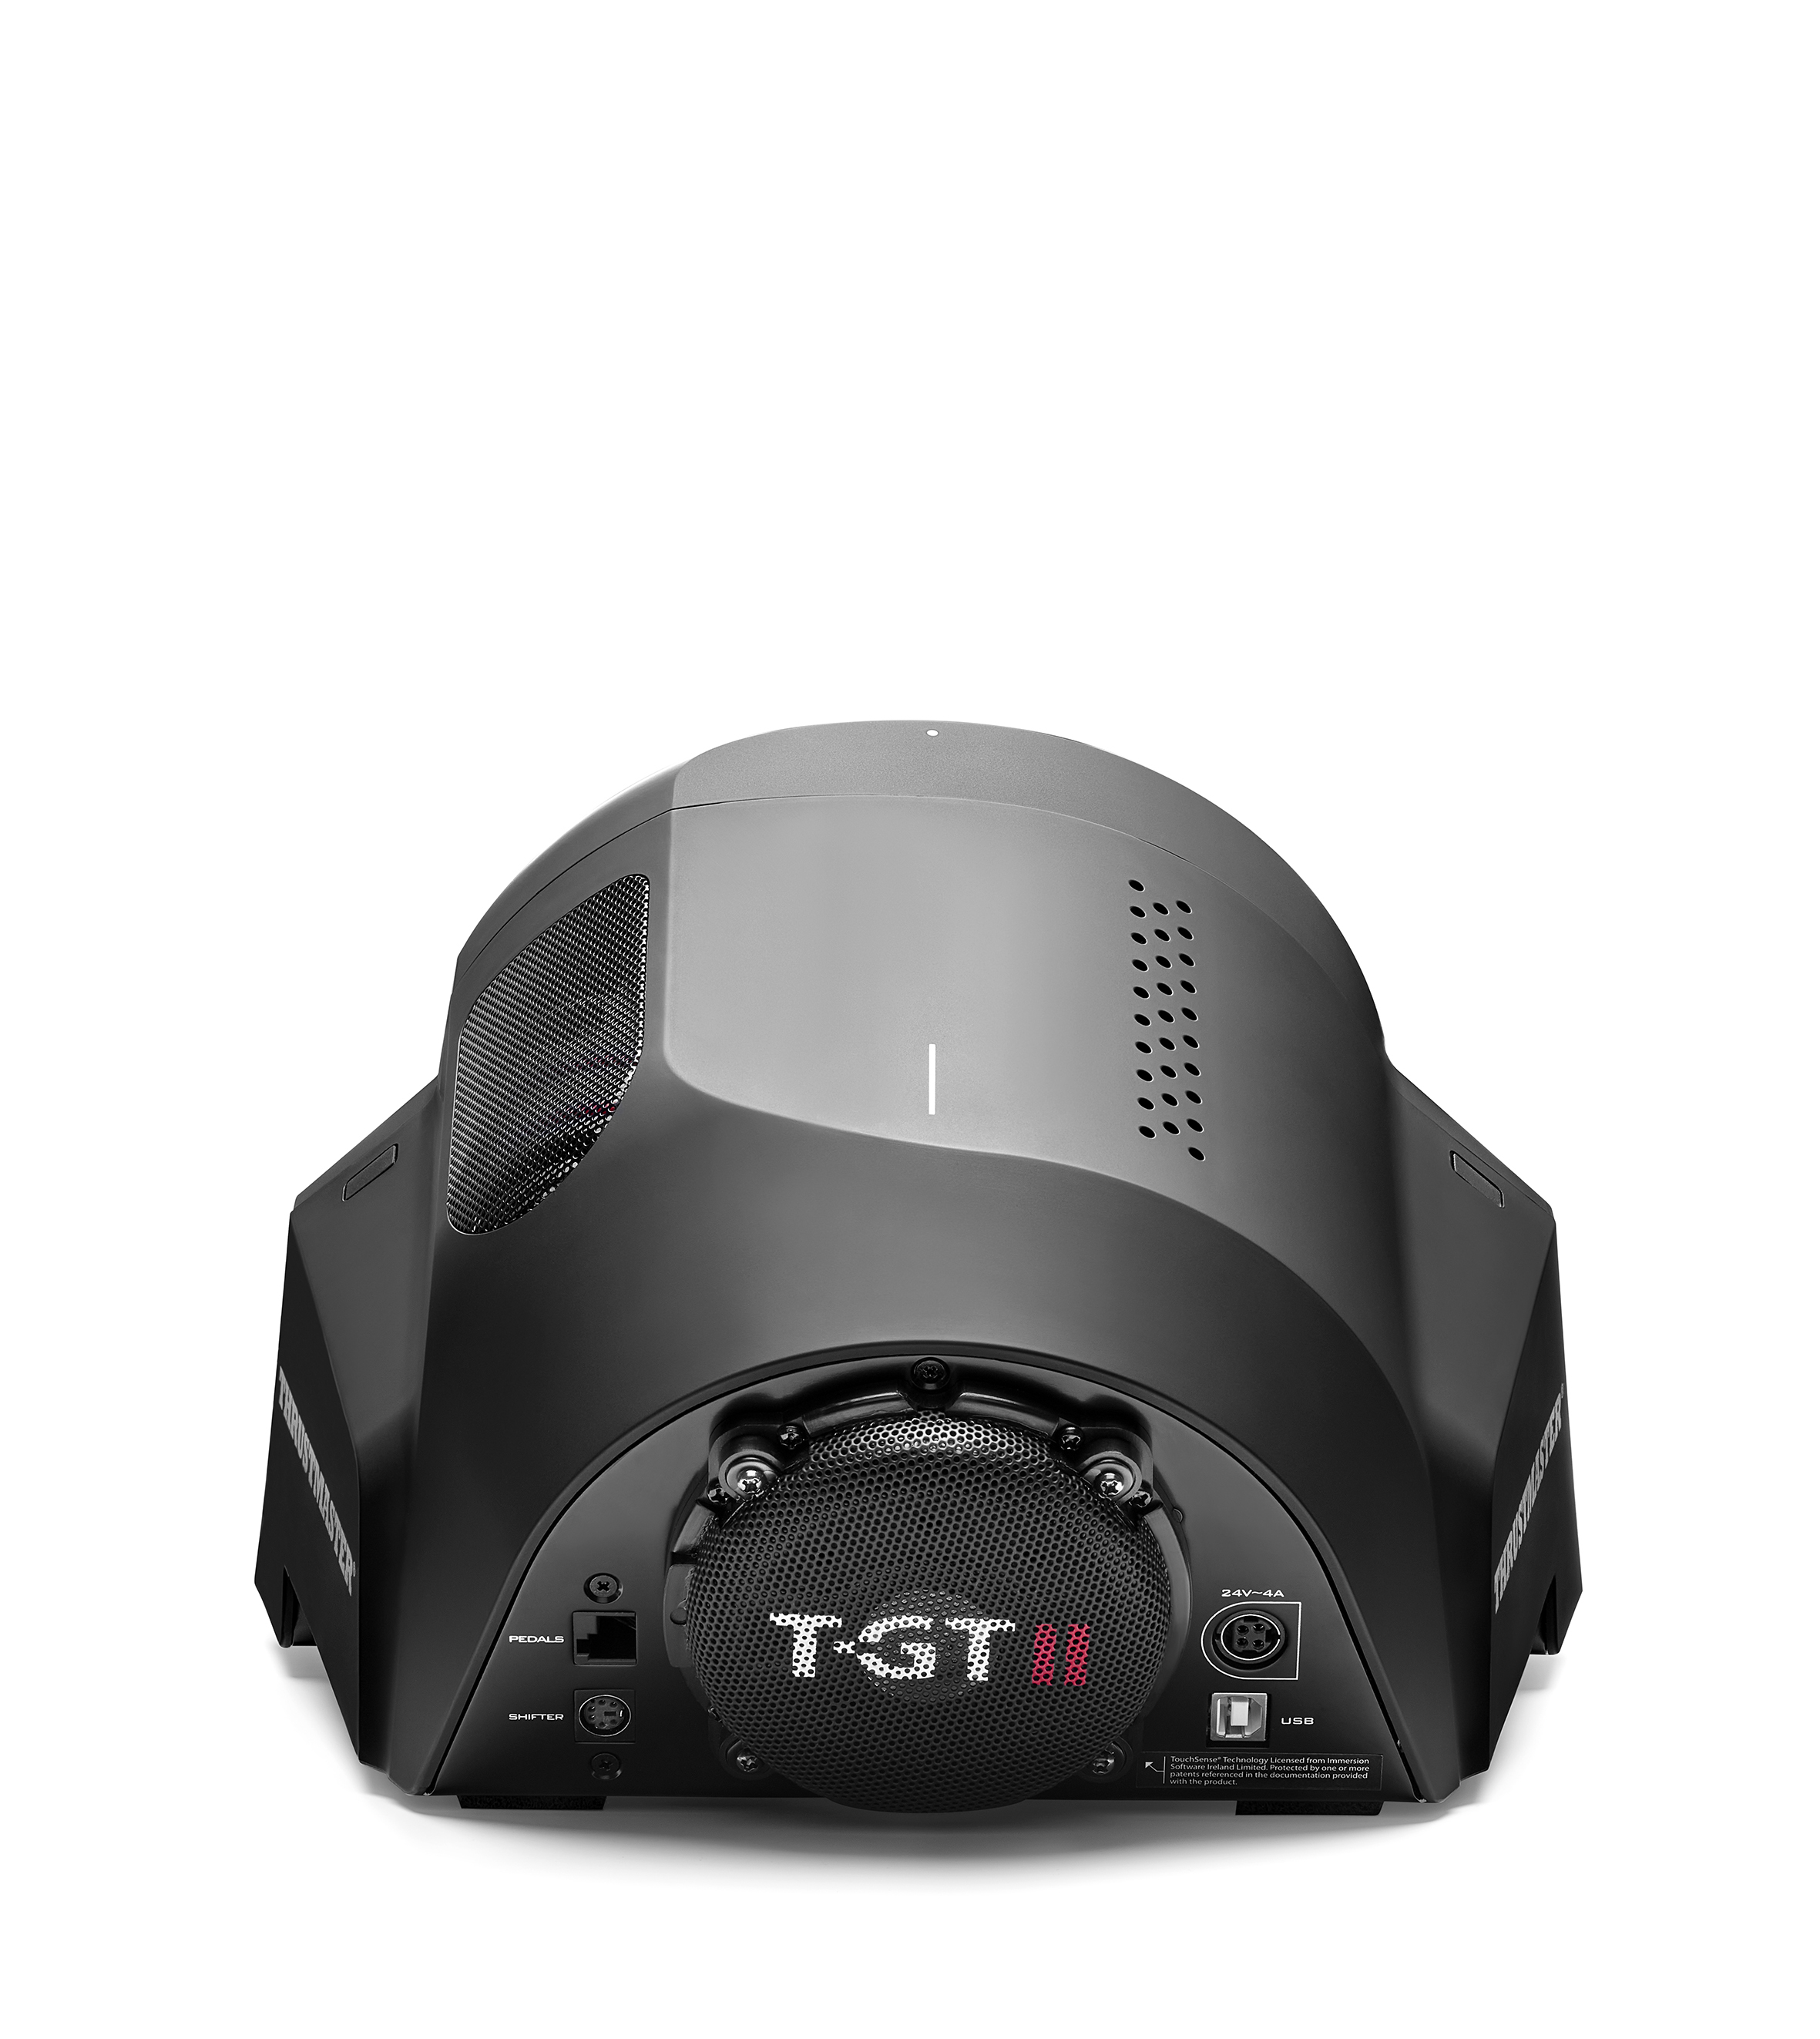 ThrustMaster T-GT II - Steering wheel attachment